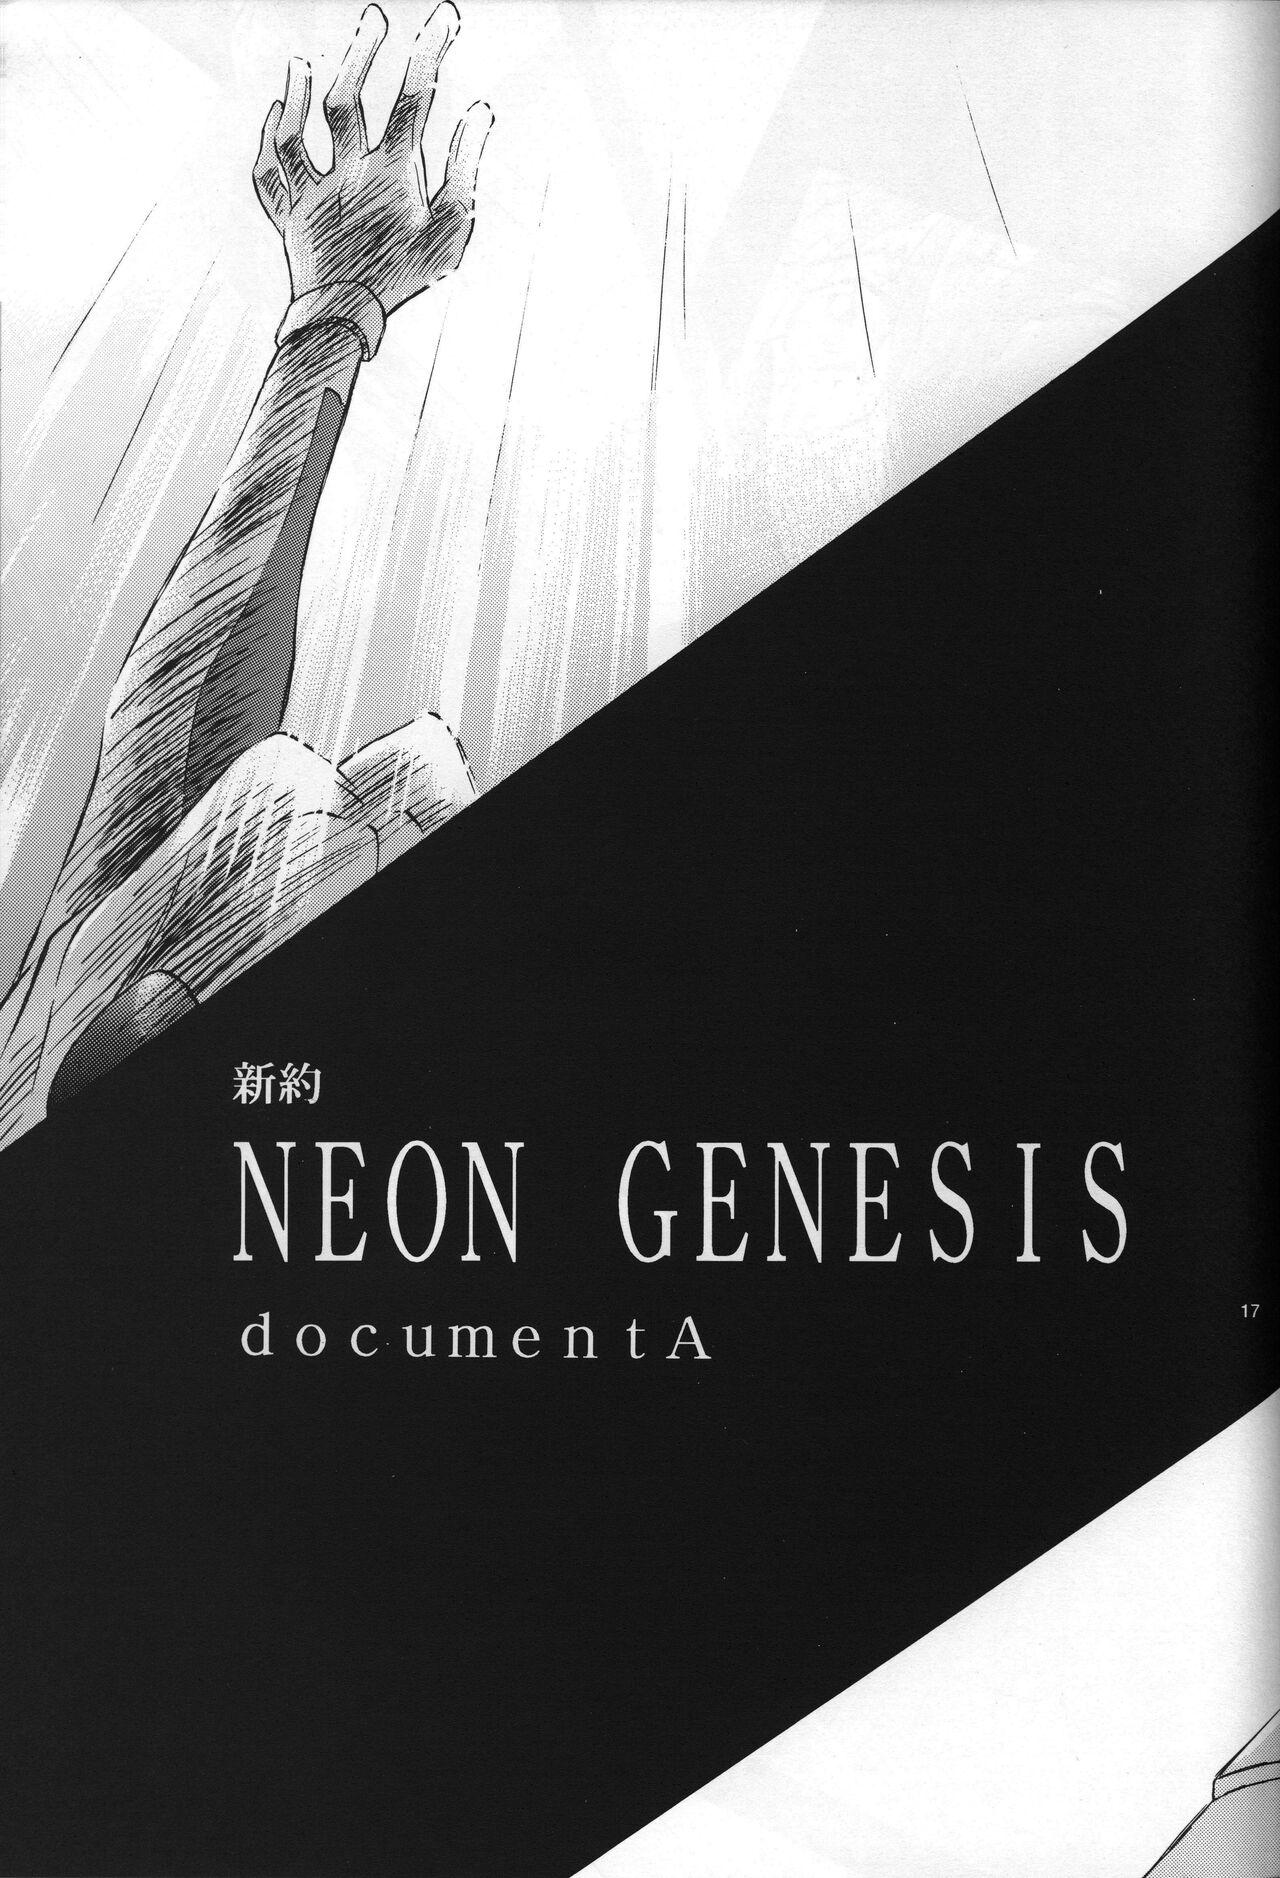 <New Testament> neon genesis documentＡ Episode 0:13-1 18